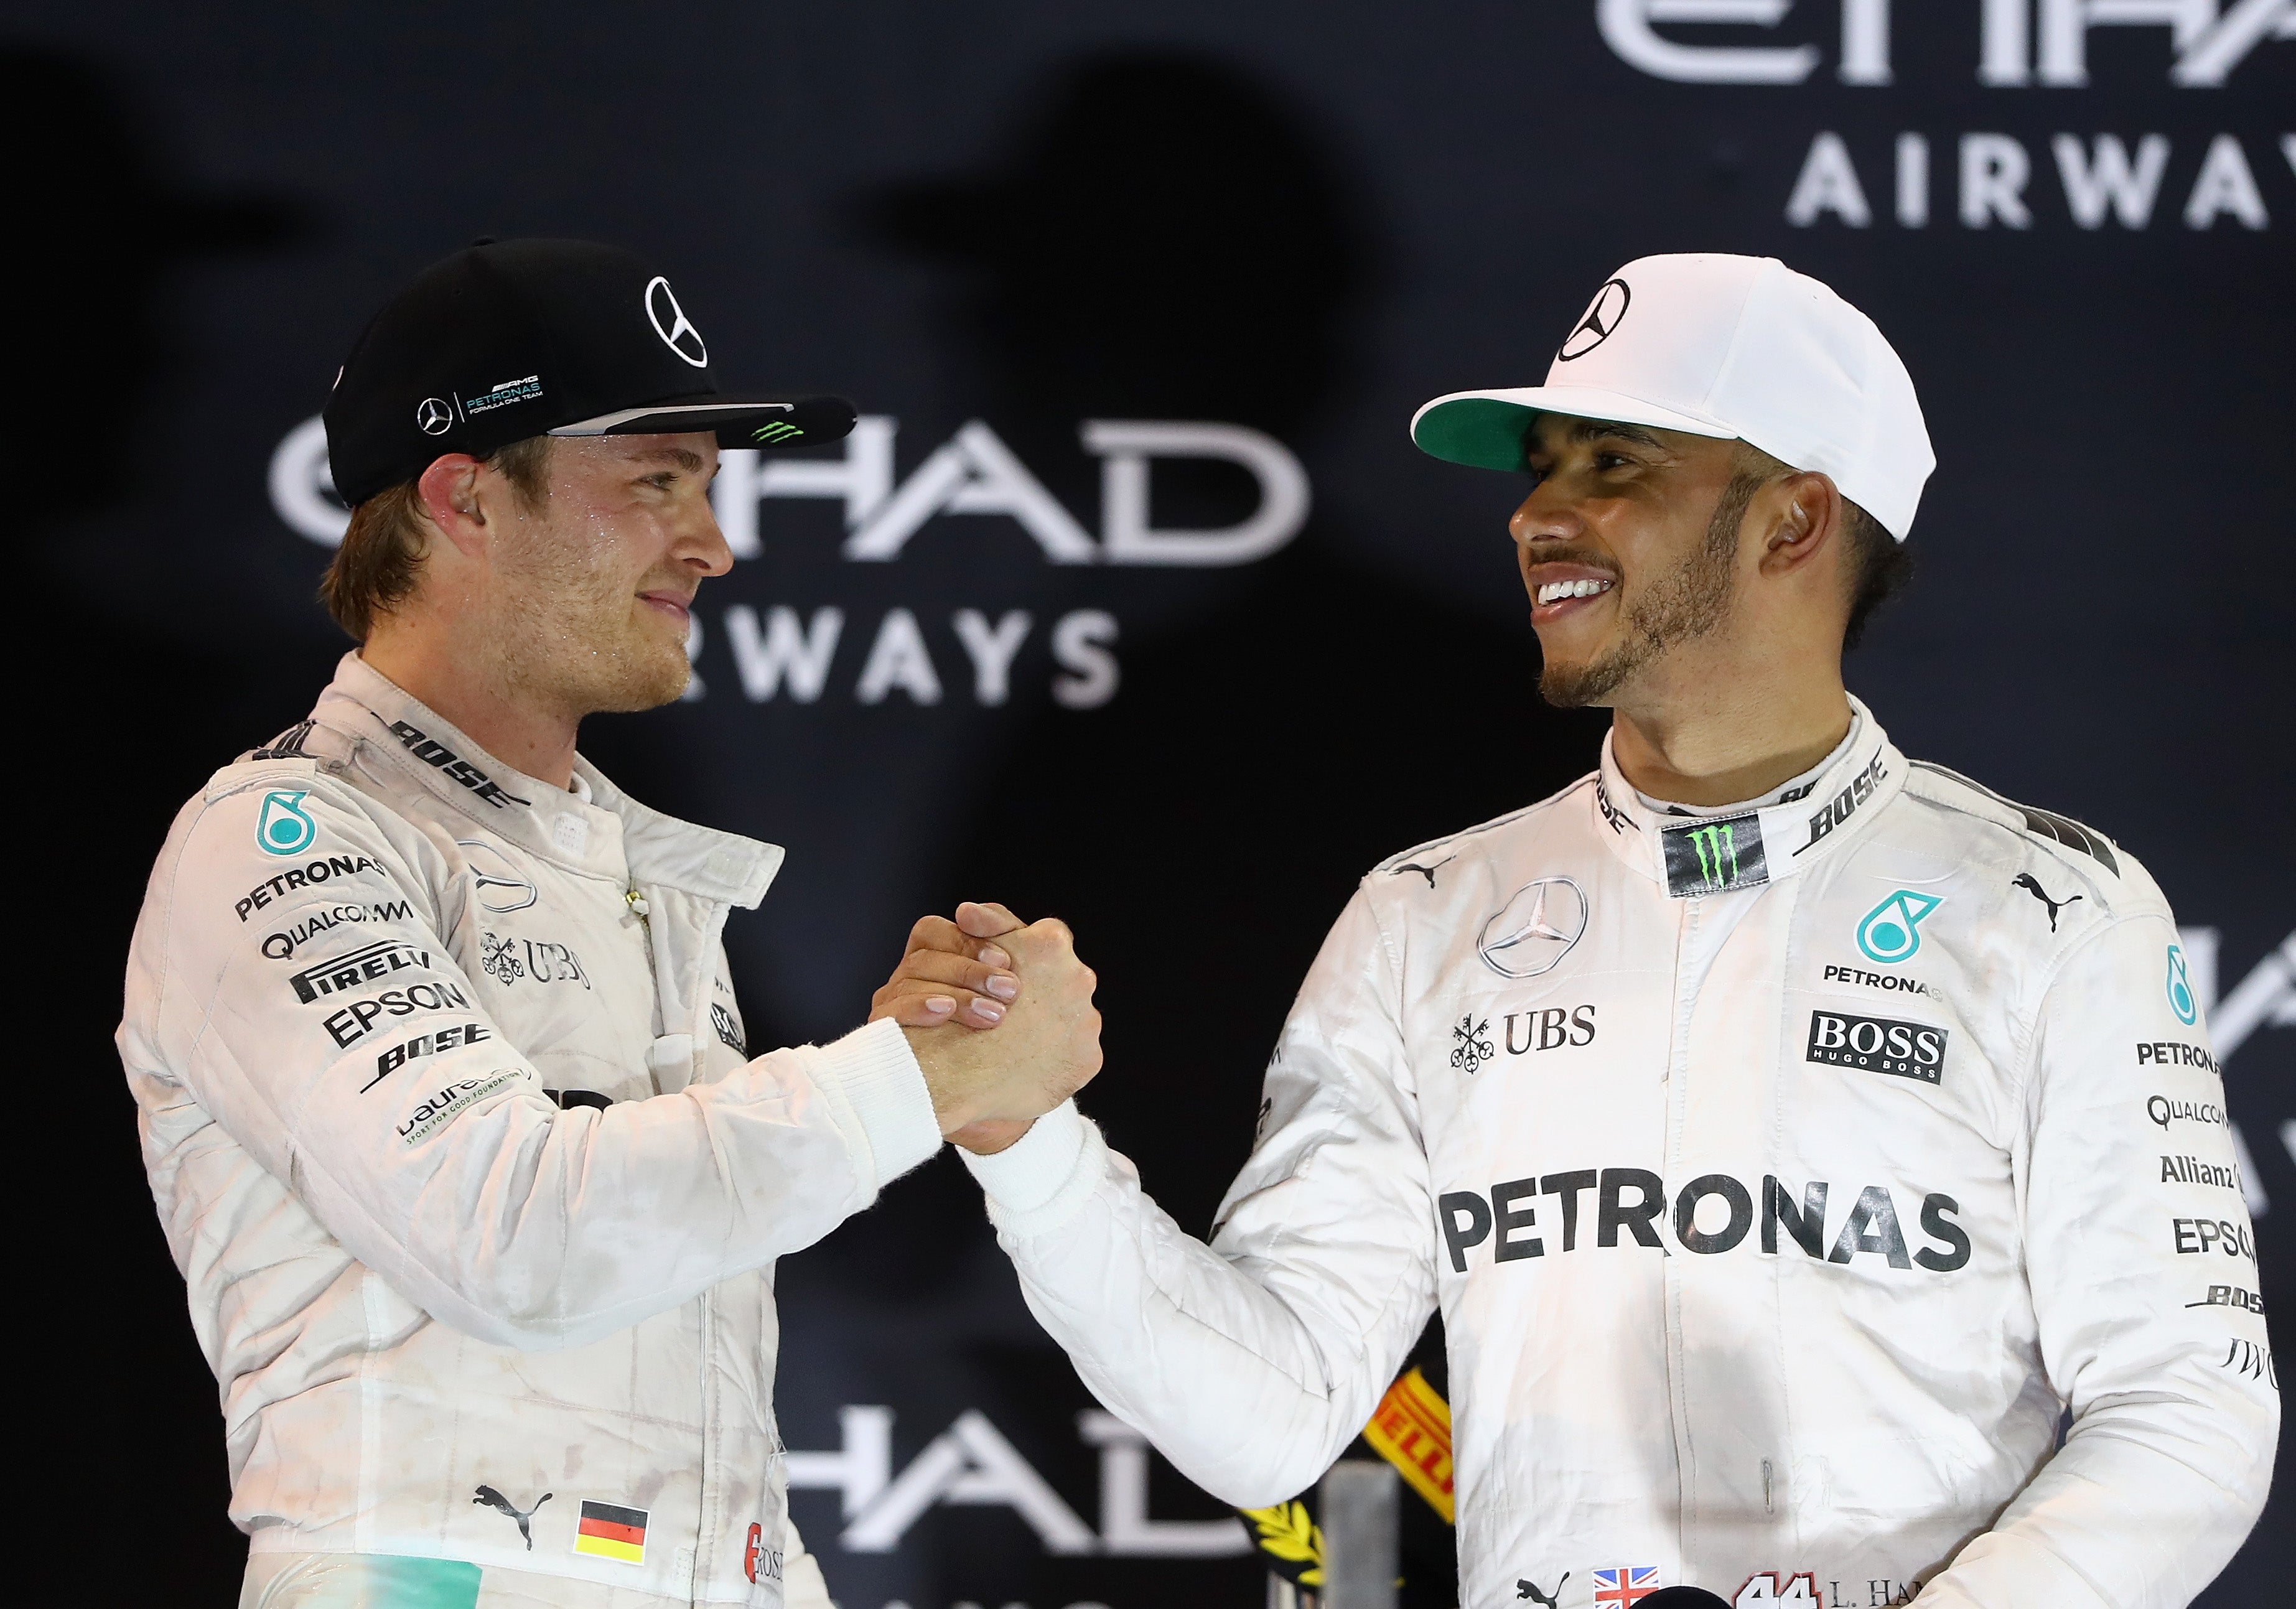 Nico Rosberg and Lewis Hamilton were Mercedes teammates